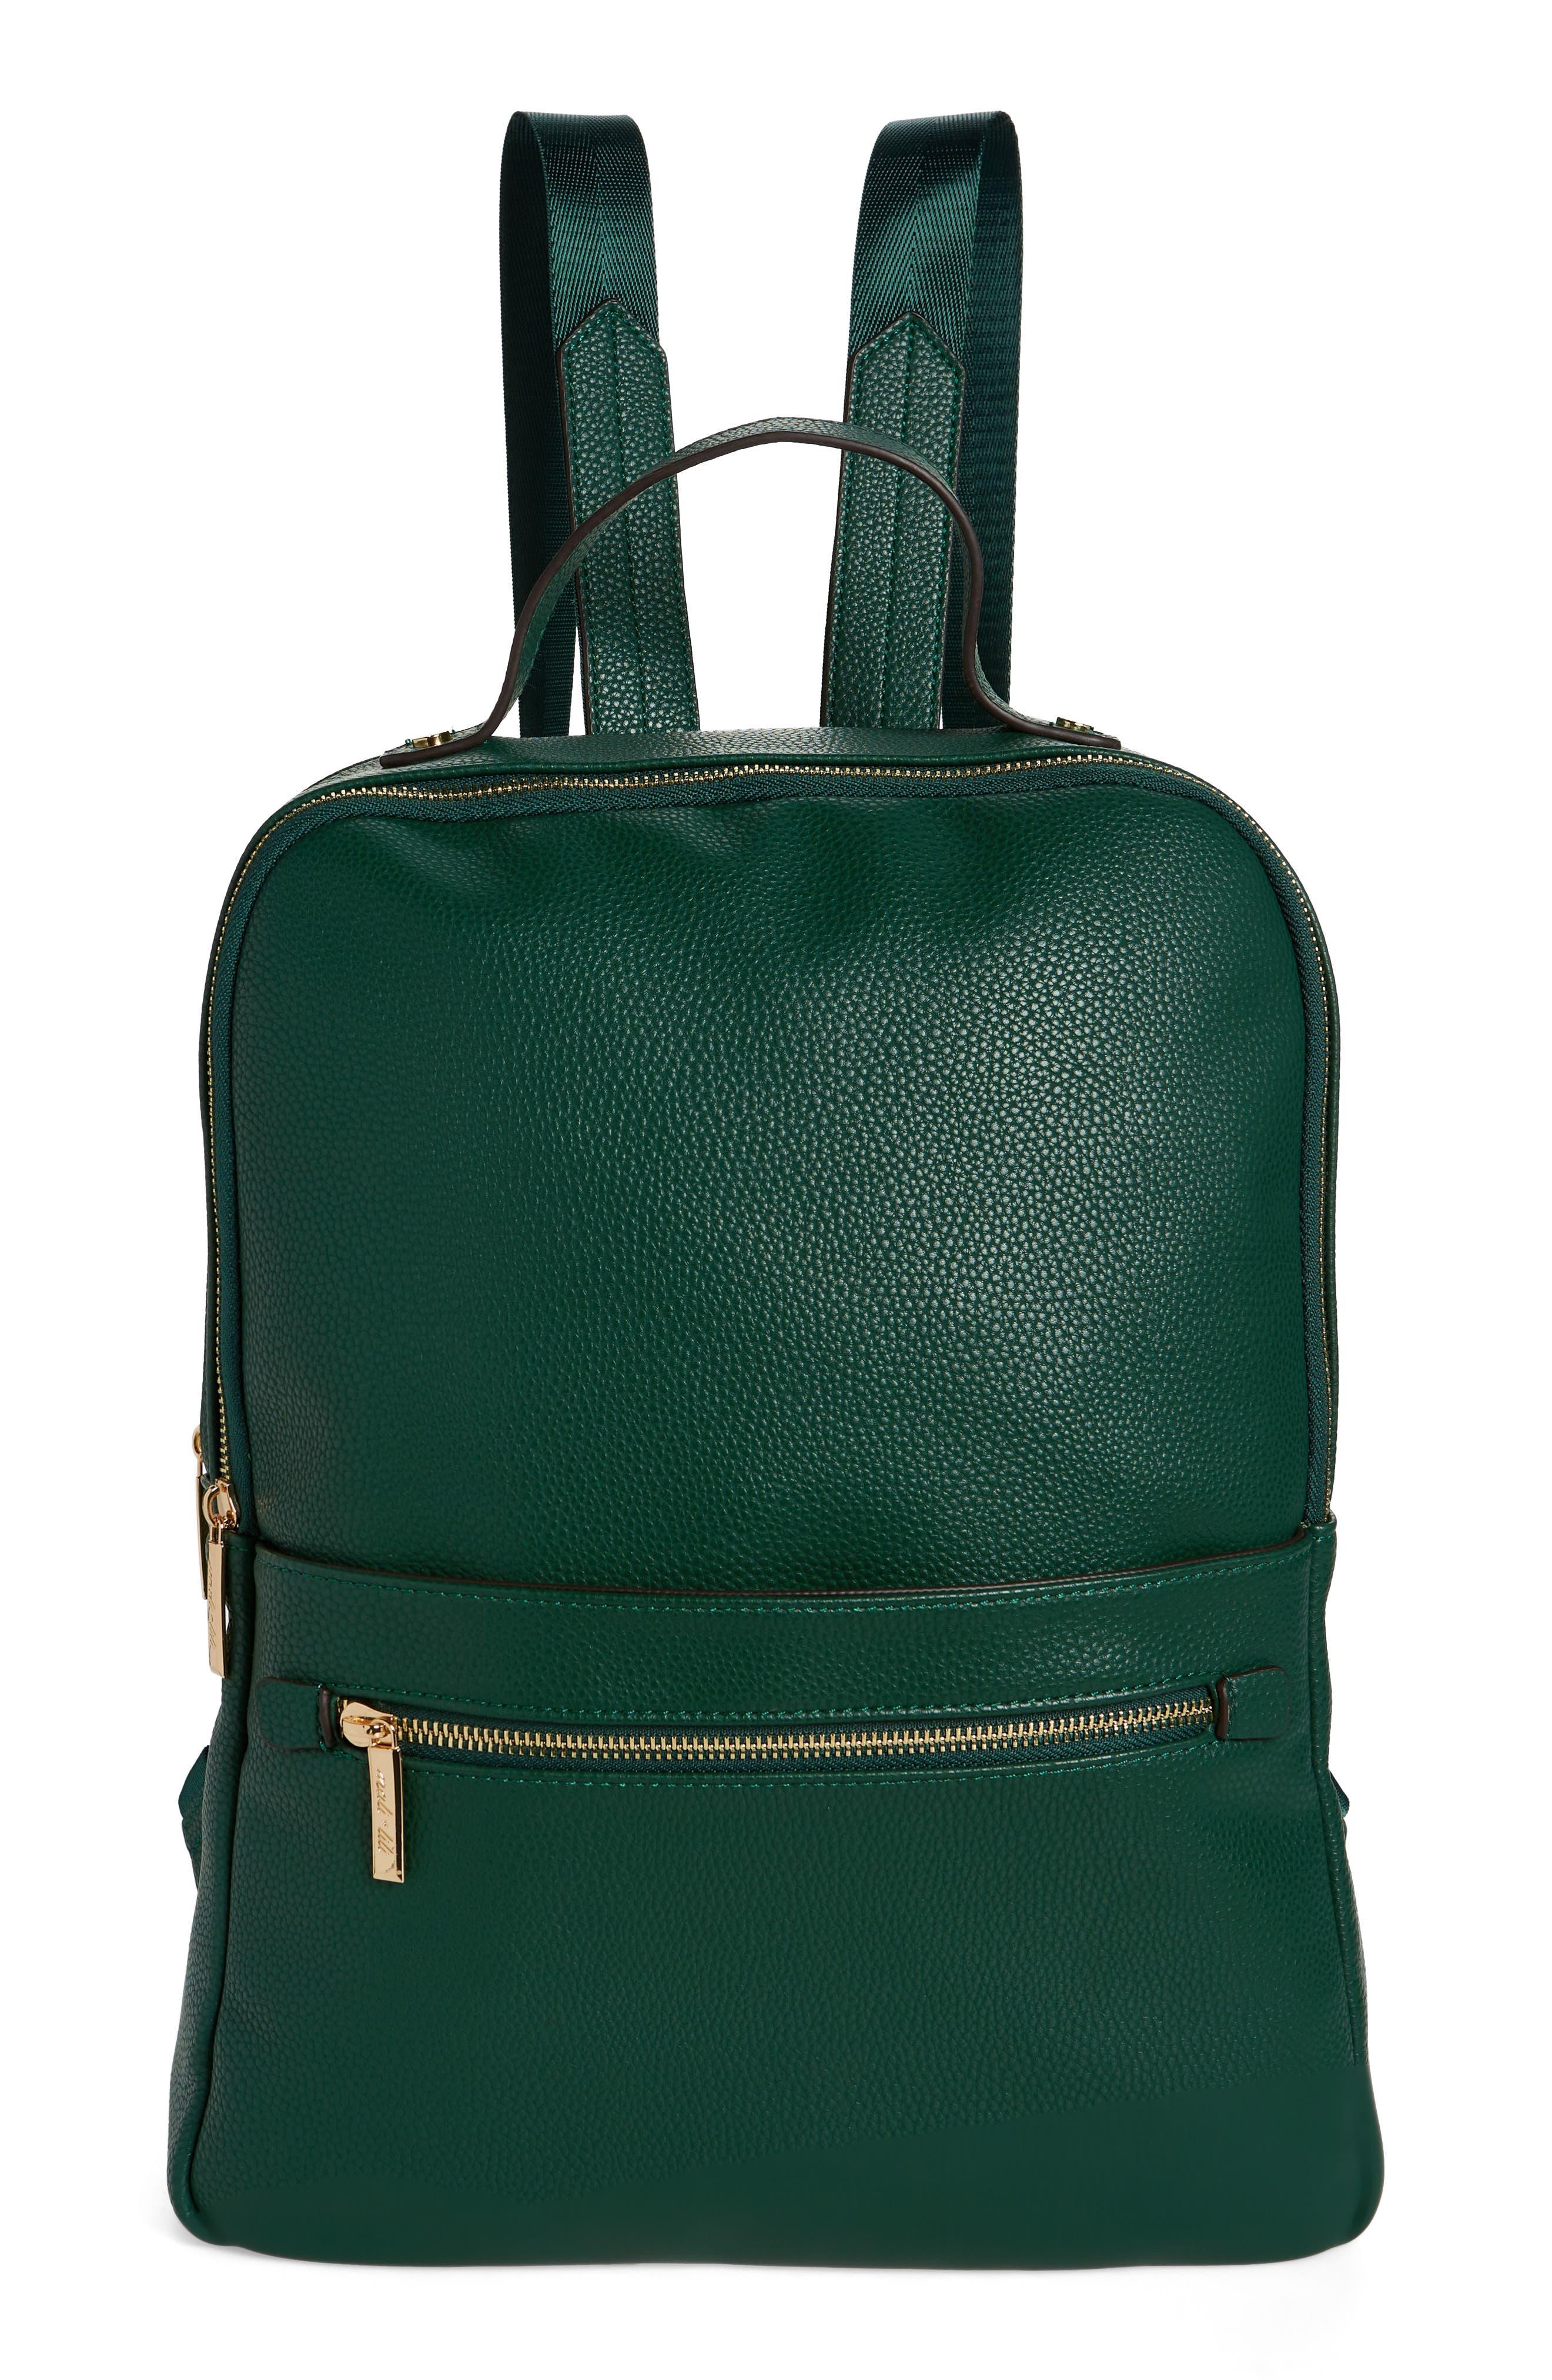 MALI + LILI Mali + Lili Ivy 15-inch Vegan Leather Laptop Backpack in Green  | Lyst